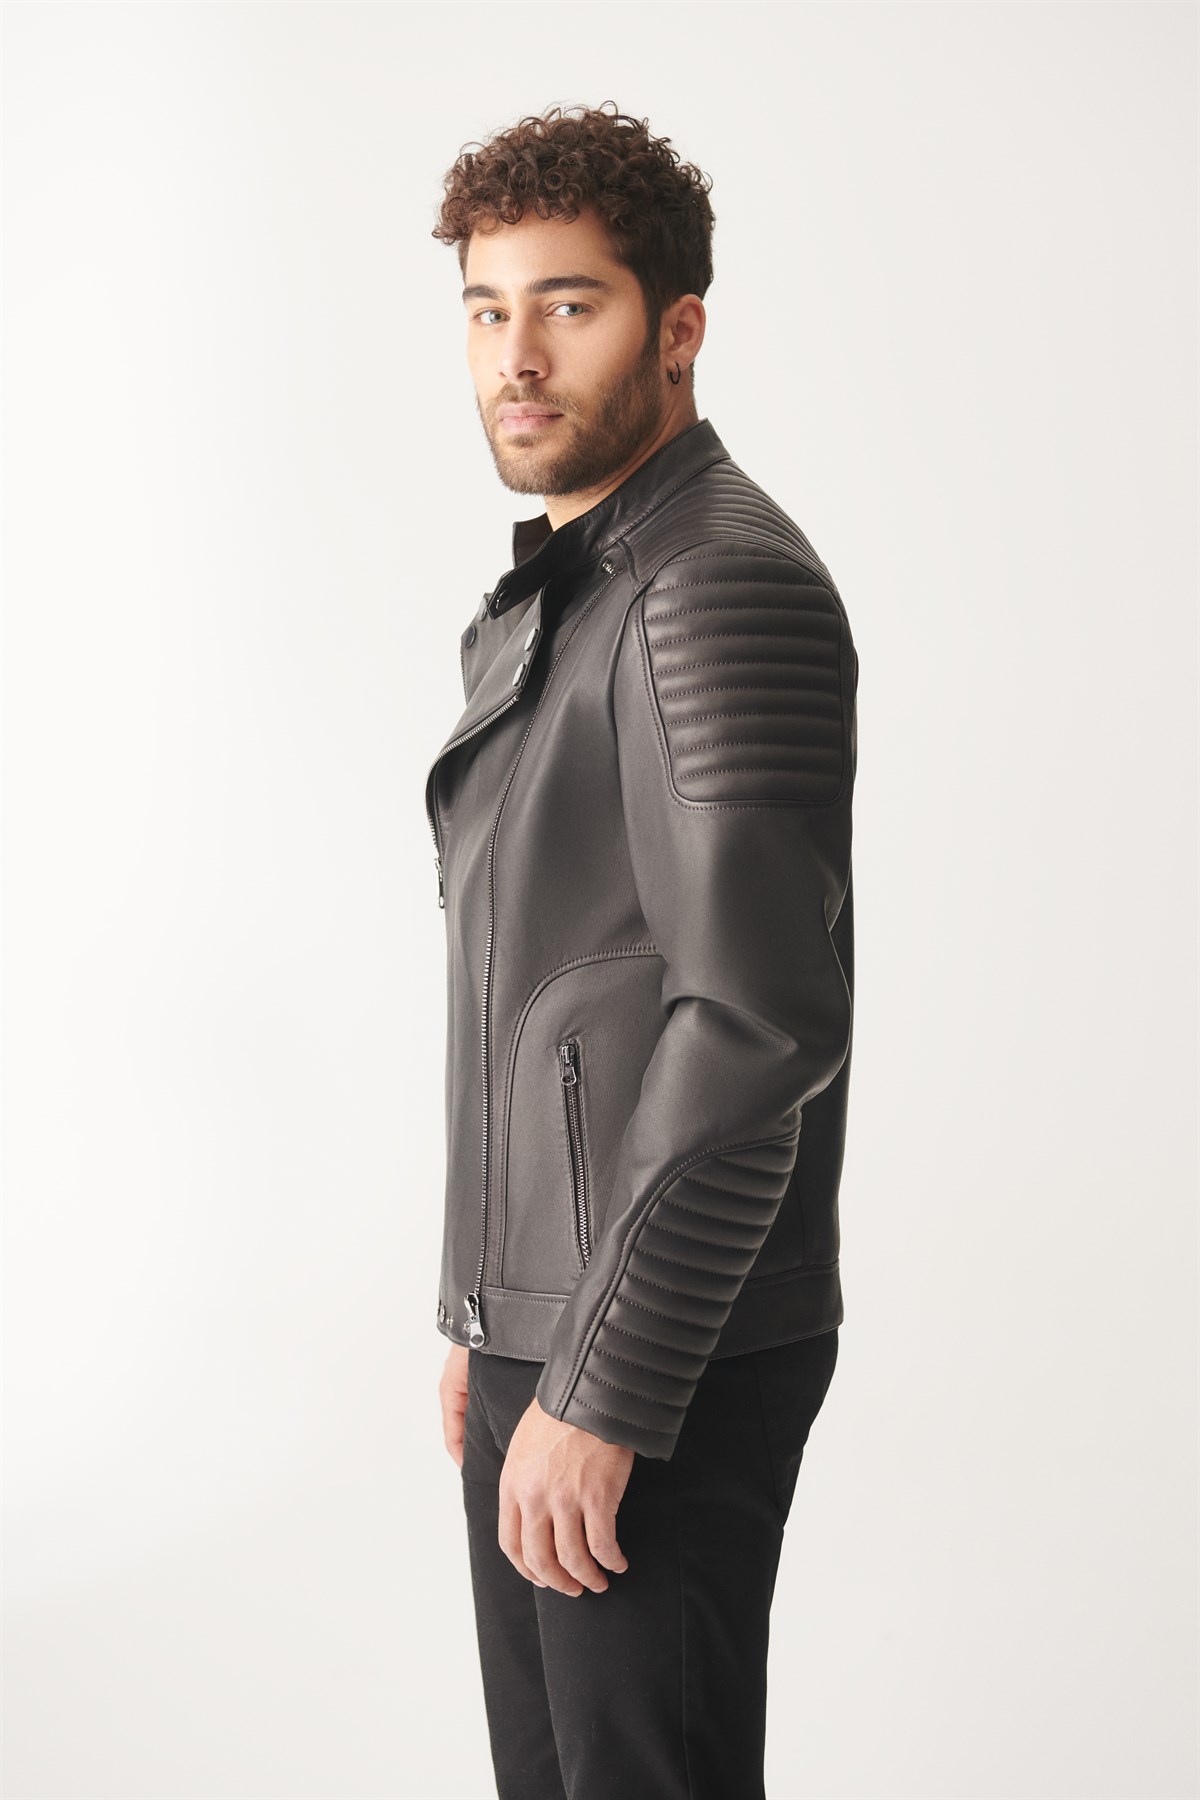 SOSA Gray Blackout Biker Leather Jacket | Men's Leather Jacket Models